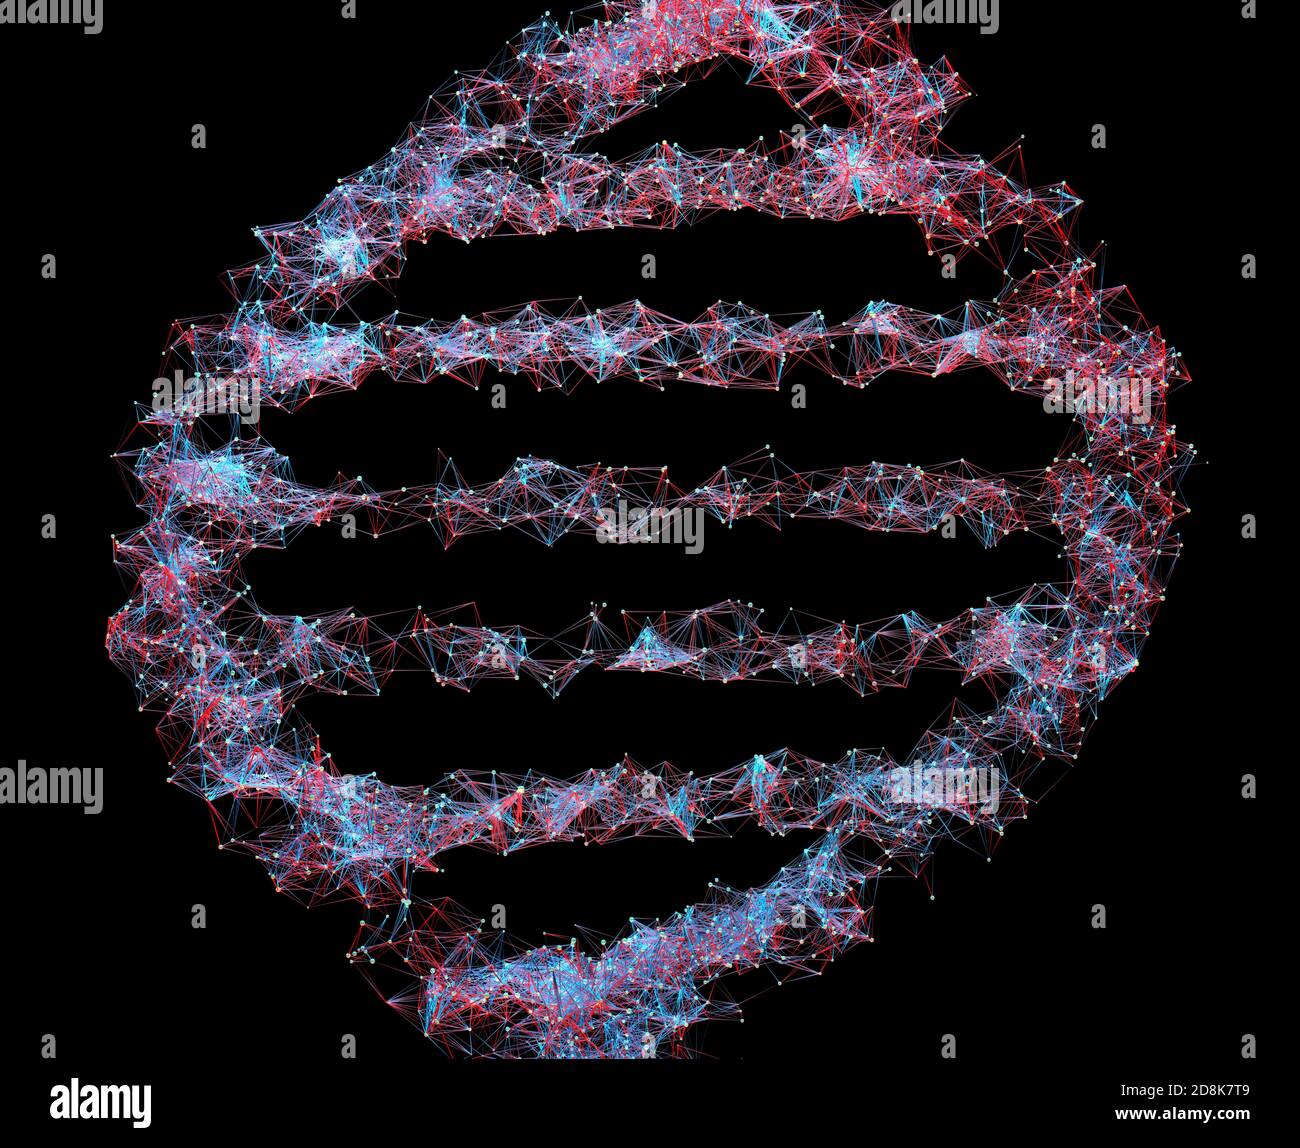 DNA (deoxyribonucleic acid) molecule, illustration. Stock Photo